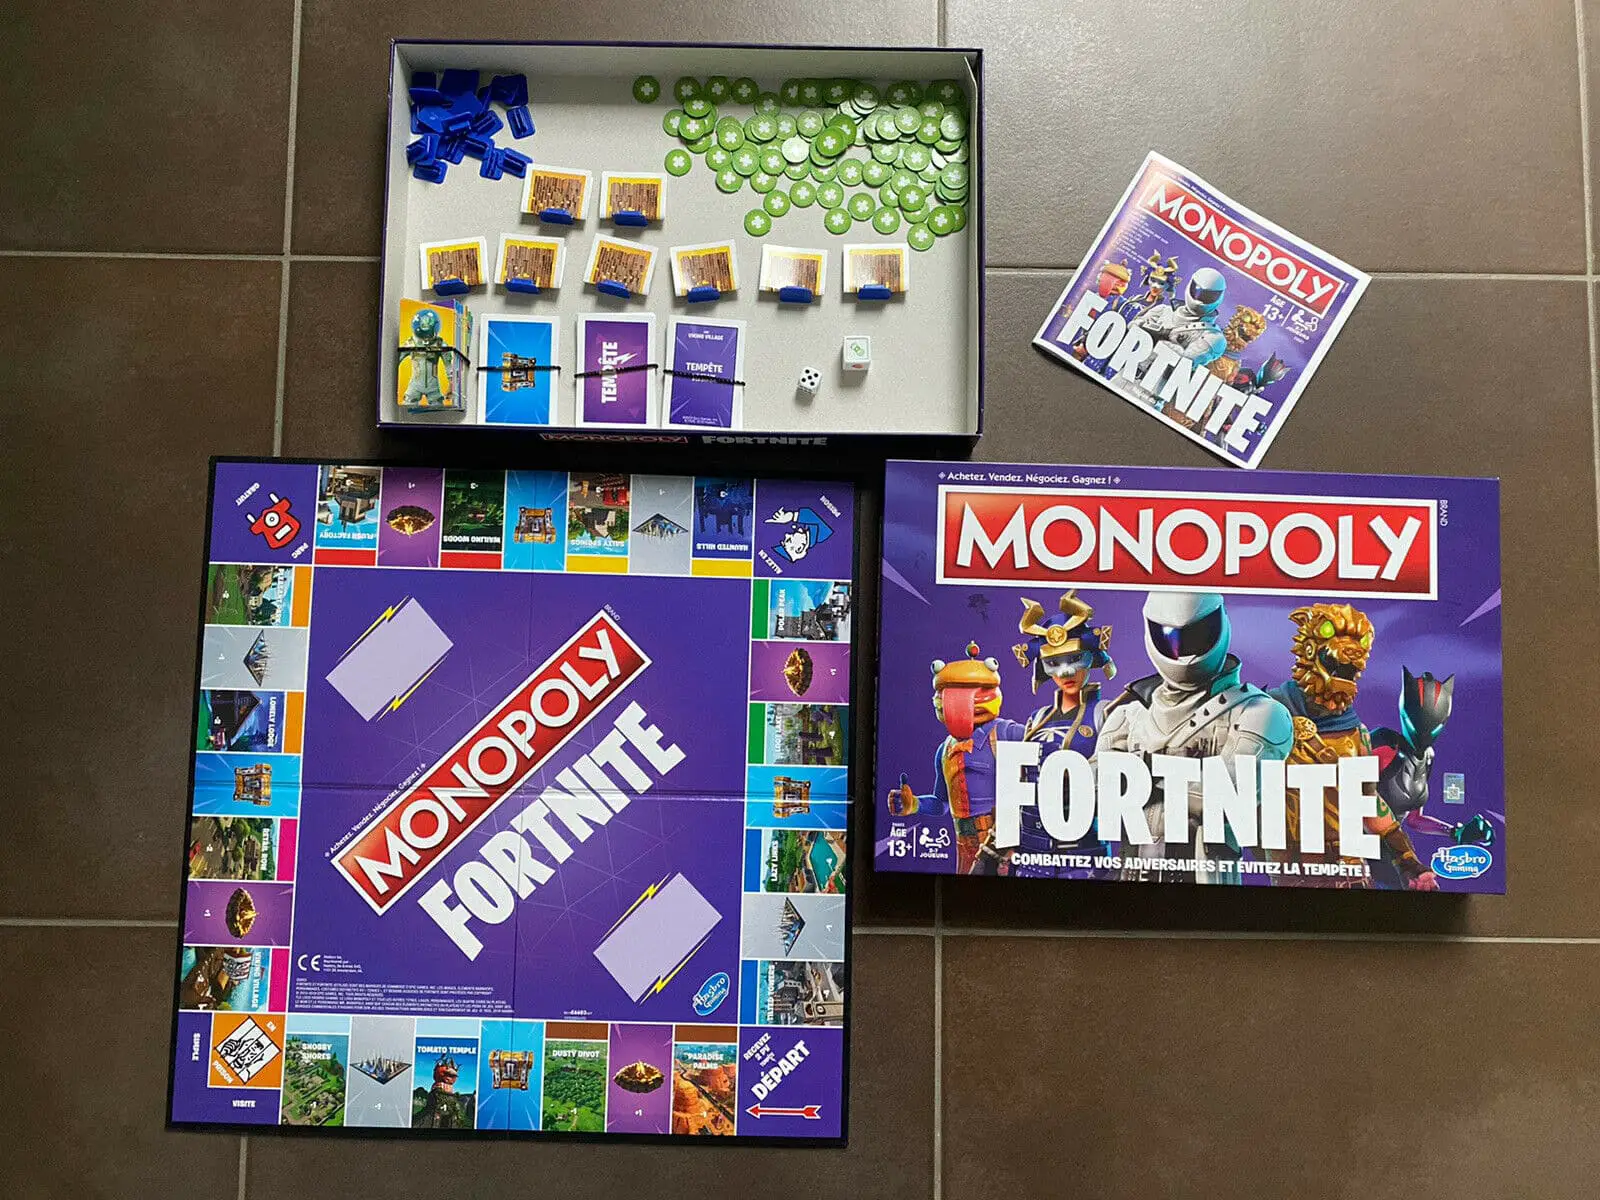 Monopoly Tricheur - Acheter sur Okkazeo